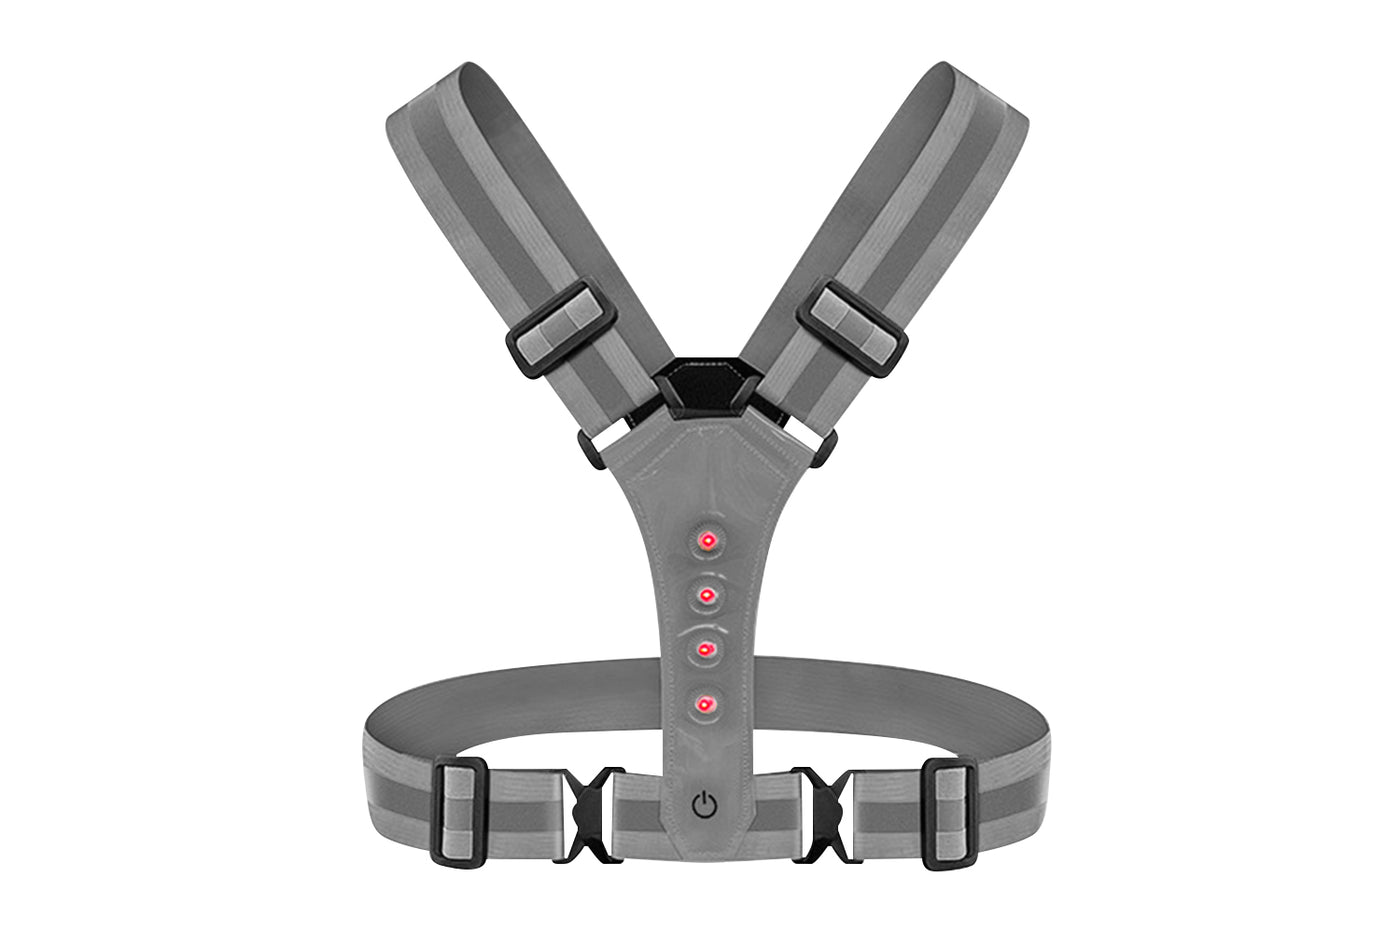 LED Reflective Vest Cycling Gear, USB Rechargeable LED Light Up Vest High Visibility with Adjustable Waist/Shoulder